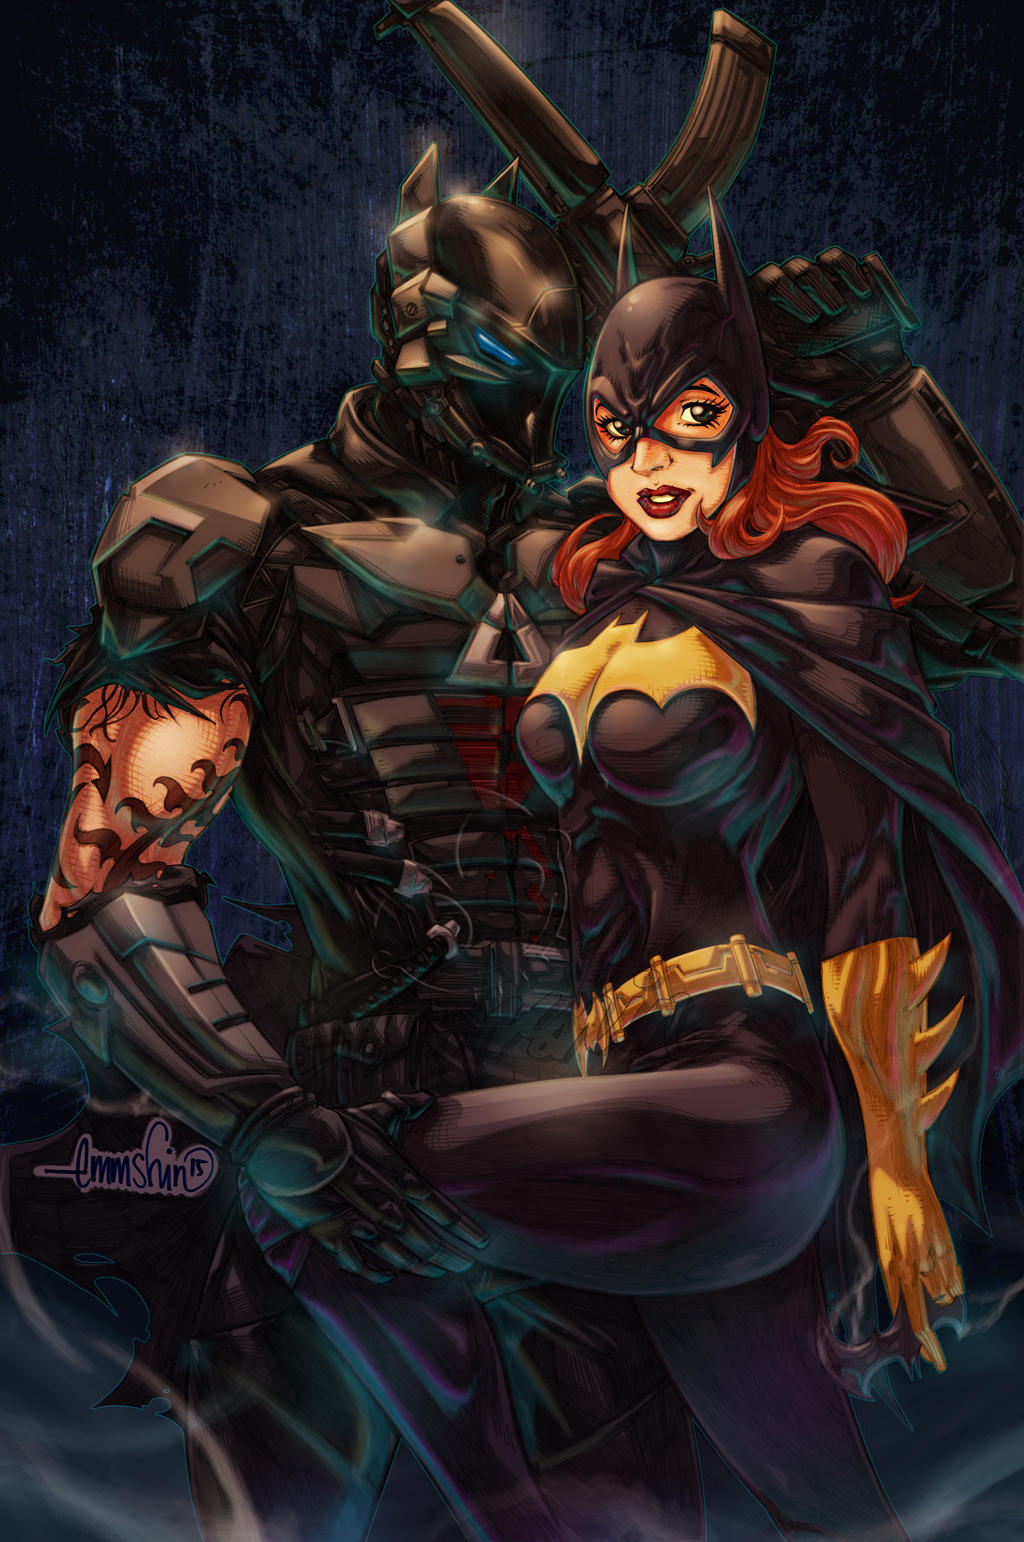 Arkham Knight / Batgirl by emmshin on DeviantArt.